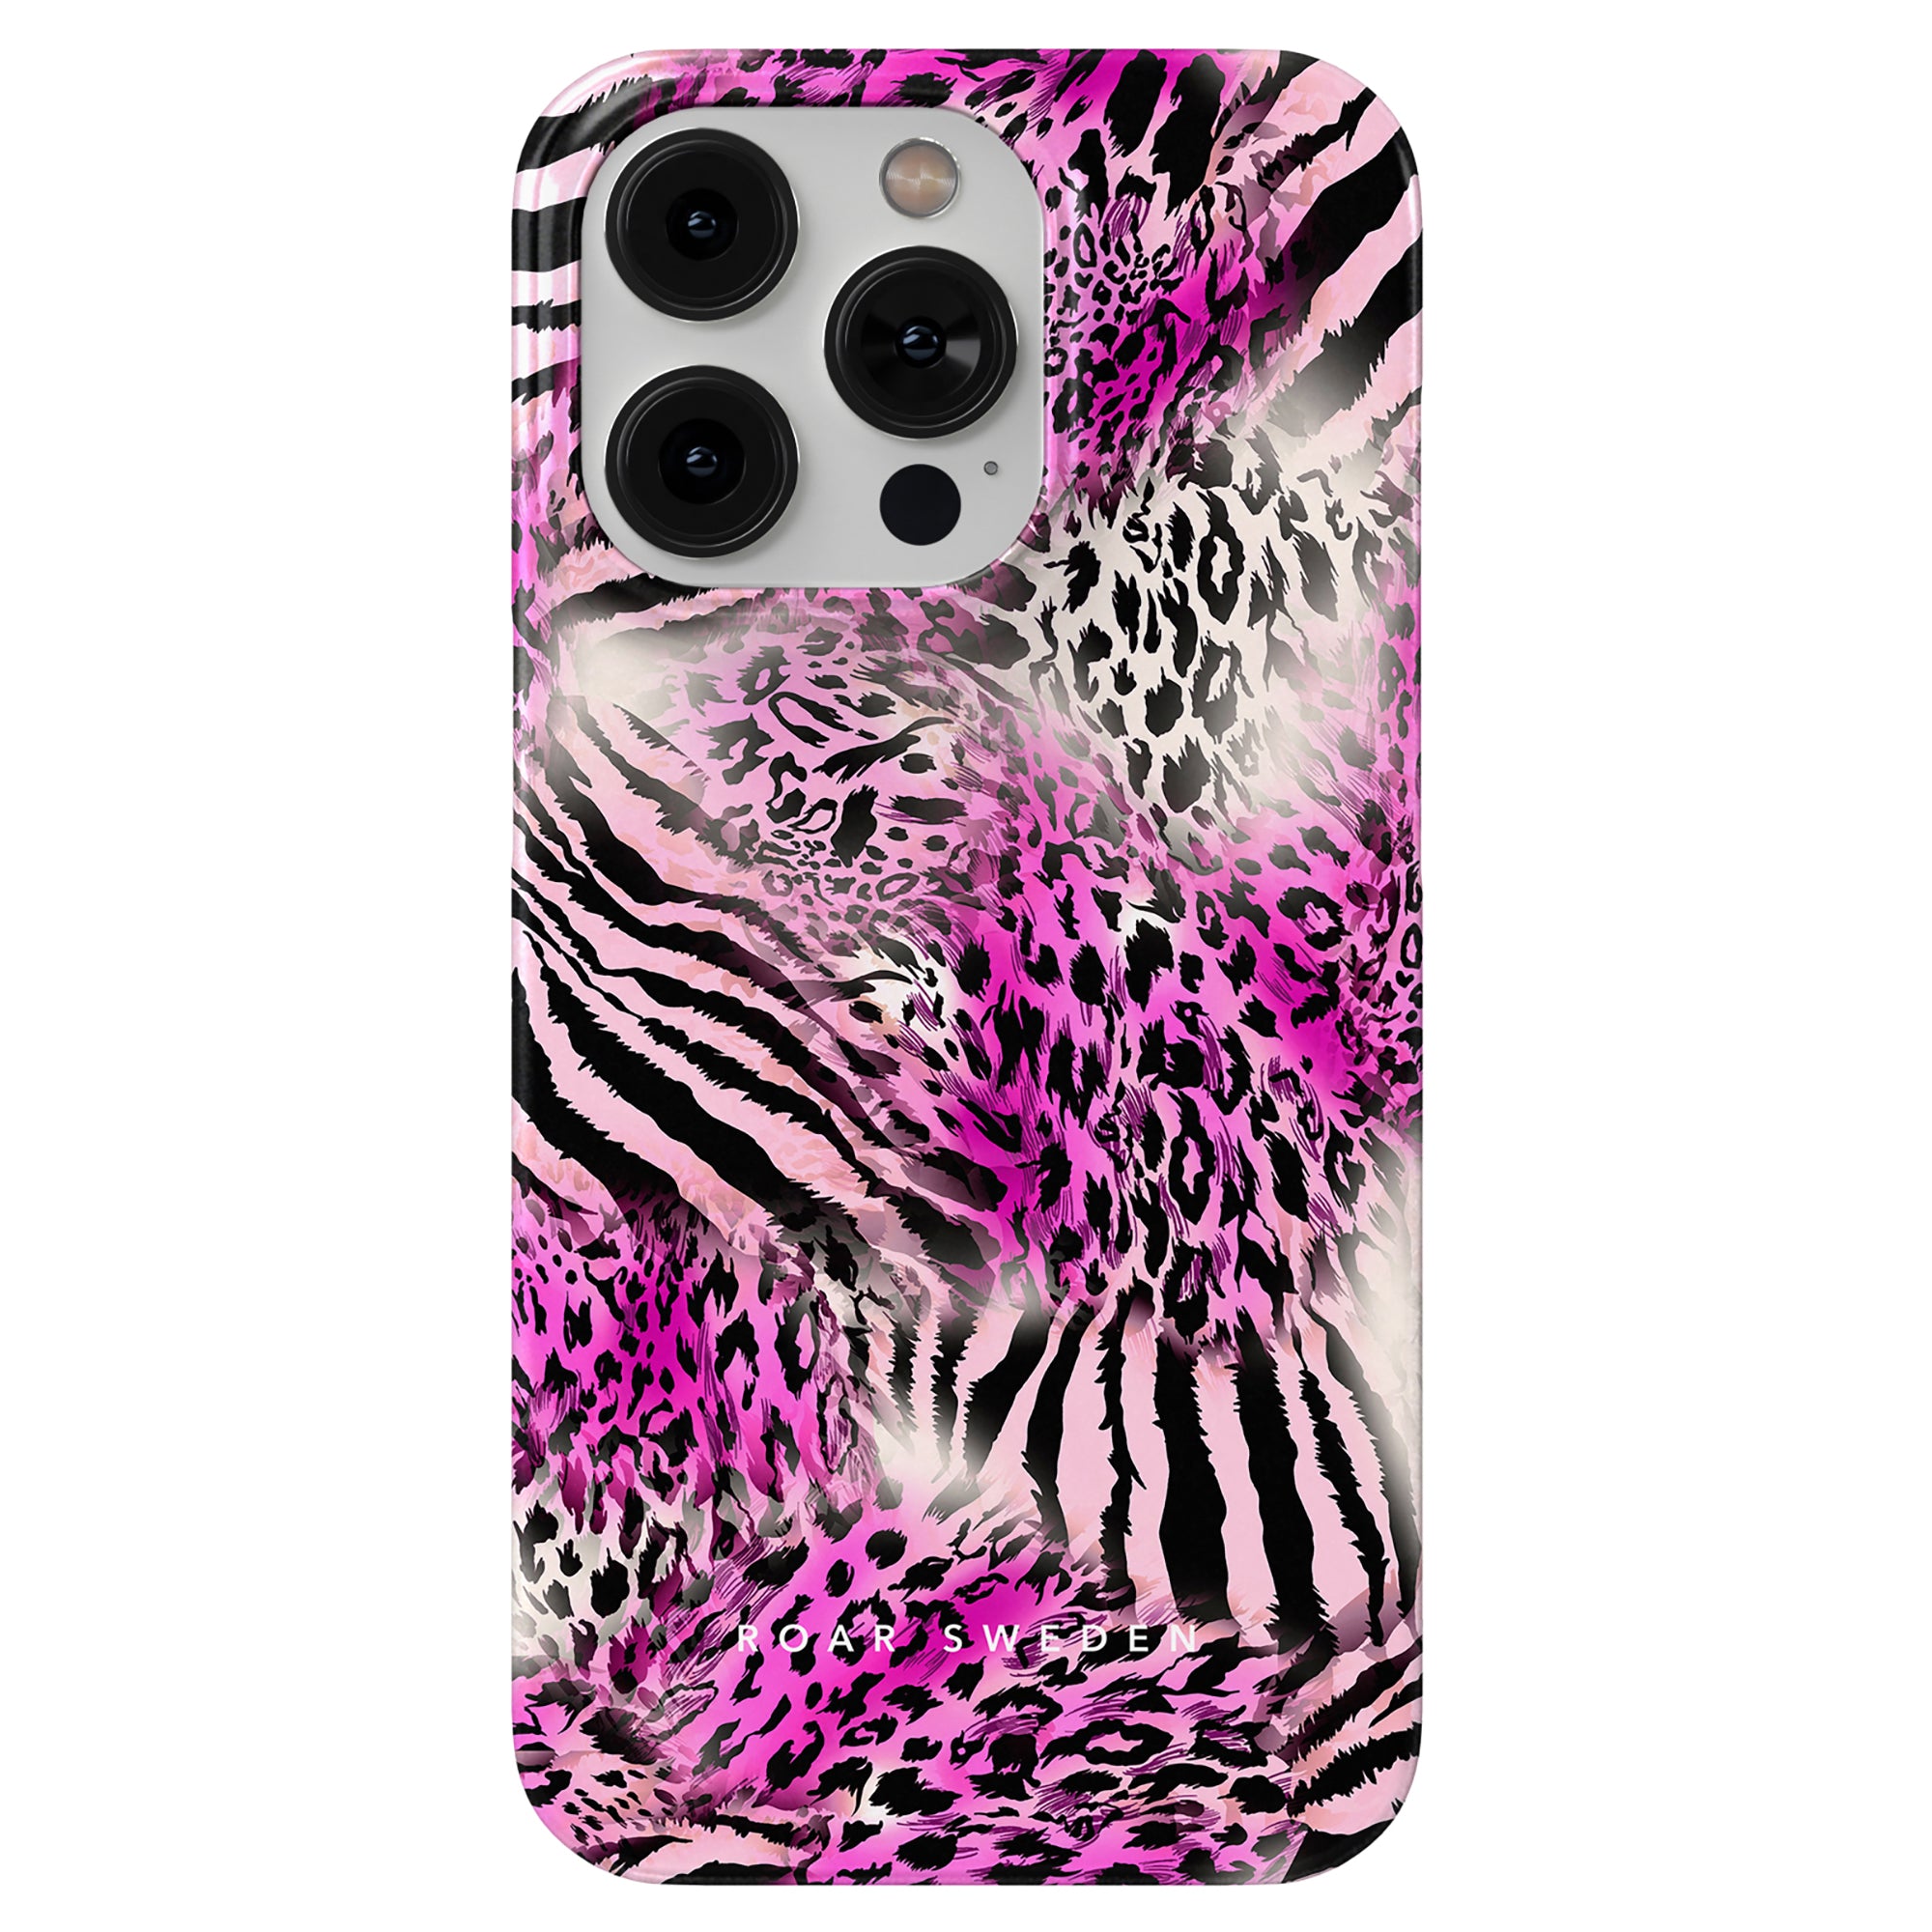 An exotisk design phone case with a Savannah Fuchsia - Slim case in pink and black zebra print.